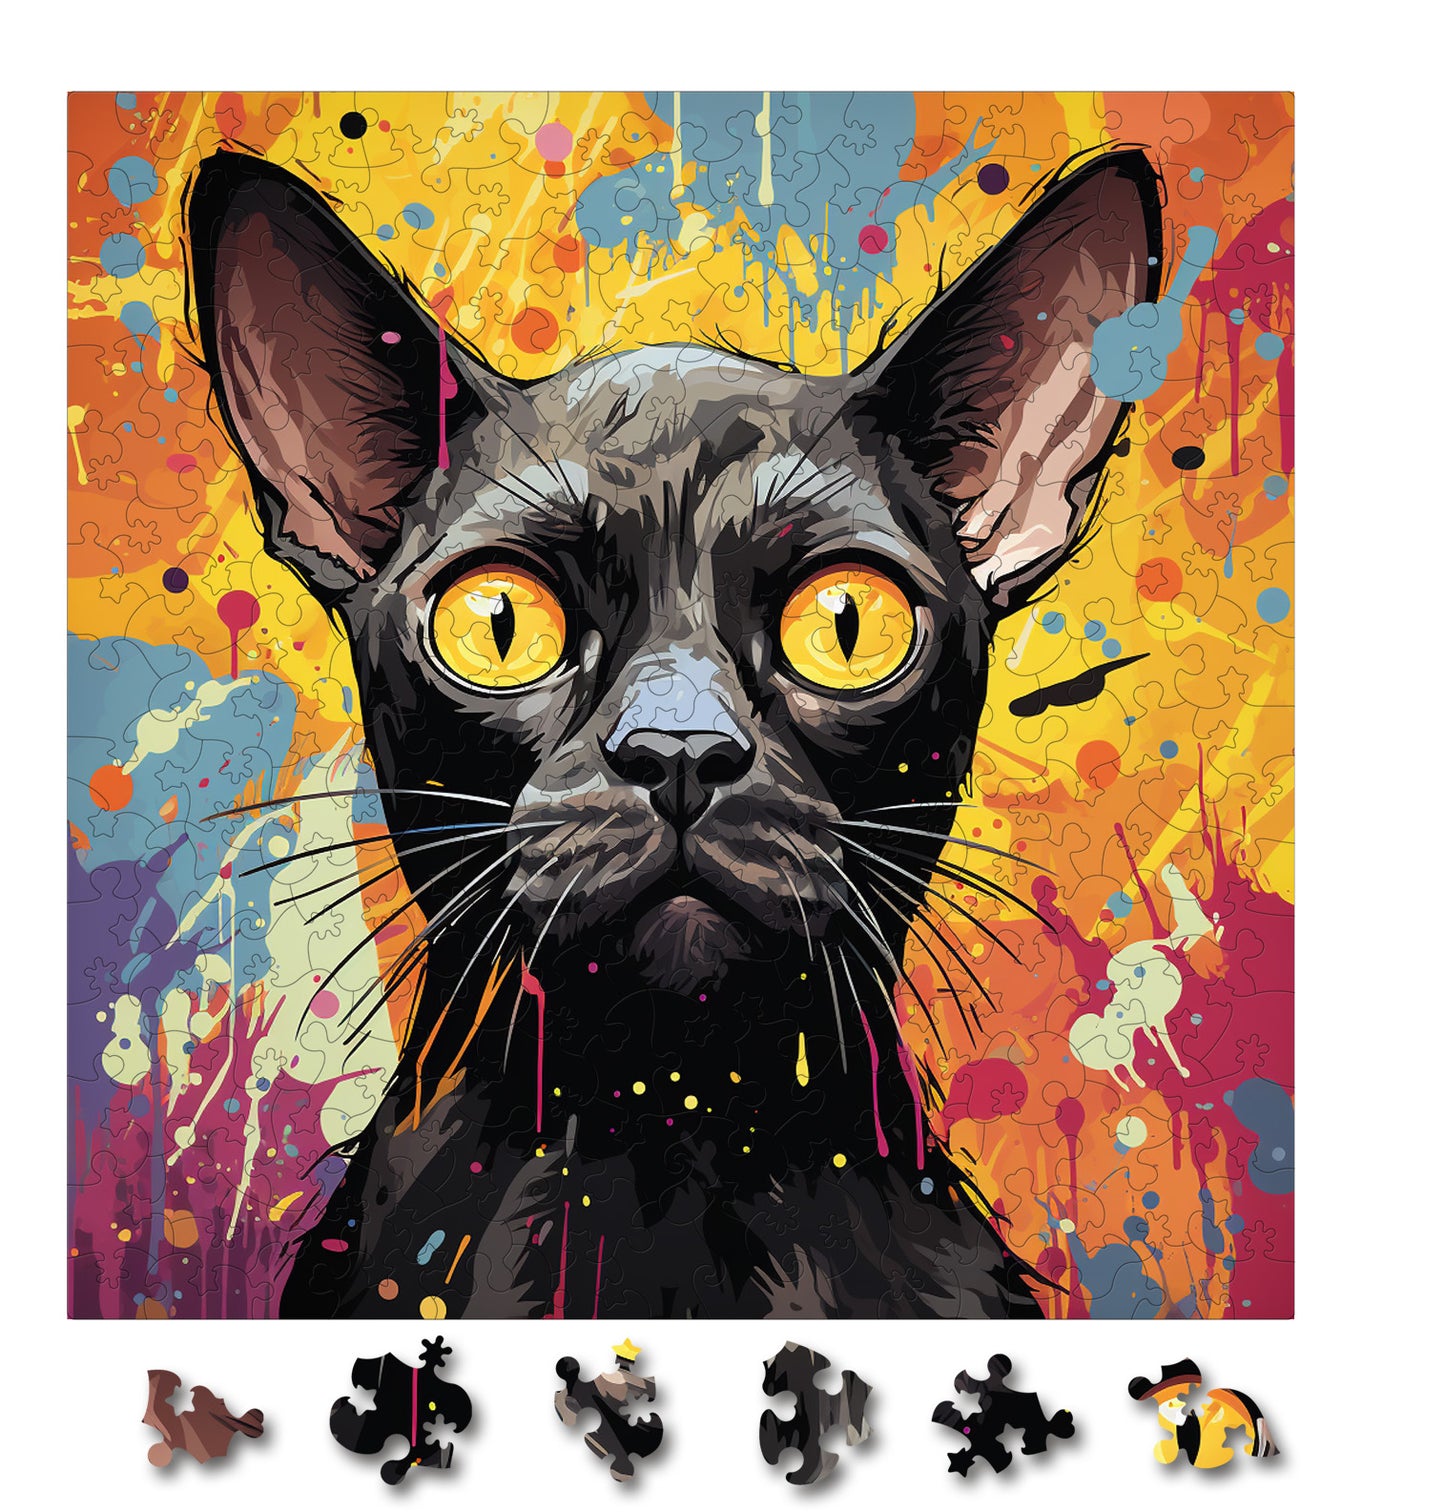 Puzzle cu Pisici - Burmese 4 - 200 piese - 30 x 30 cm